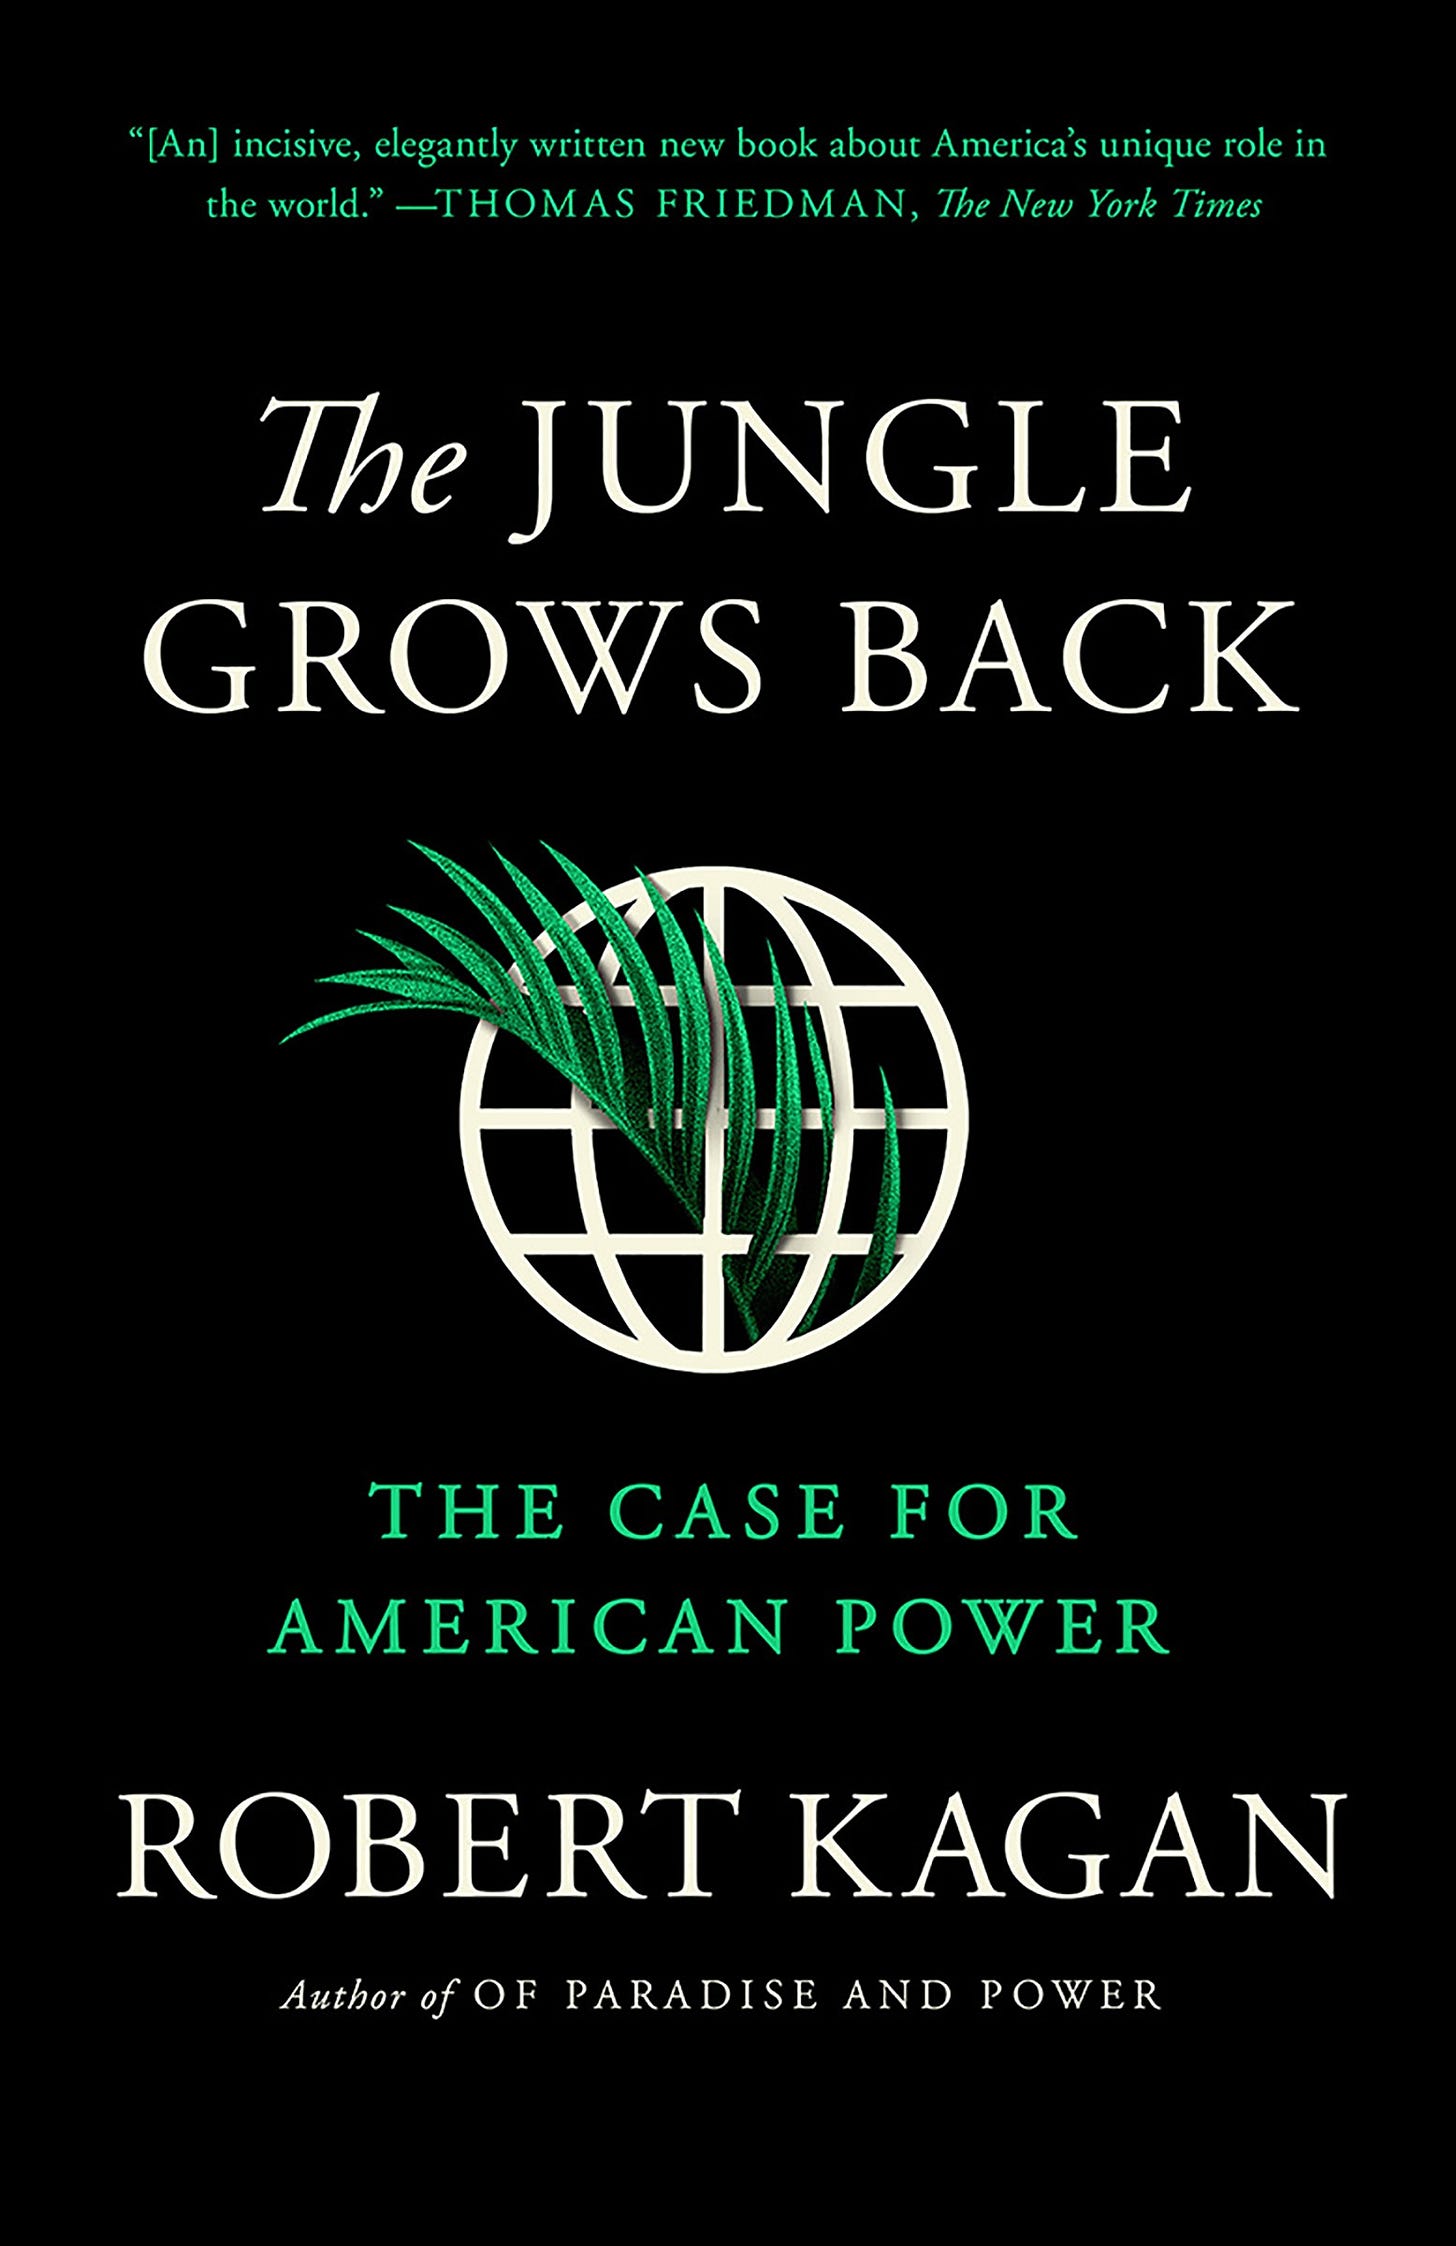 The Jungle Grows Back by Robert Kagan - Penguin Books Australia